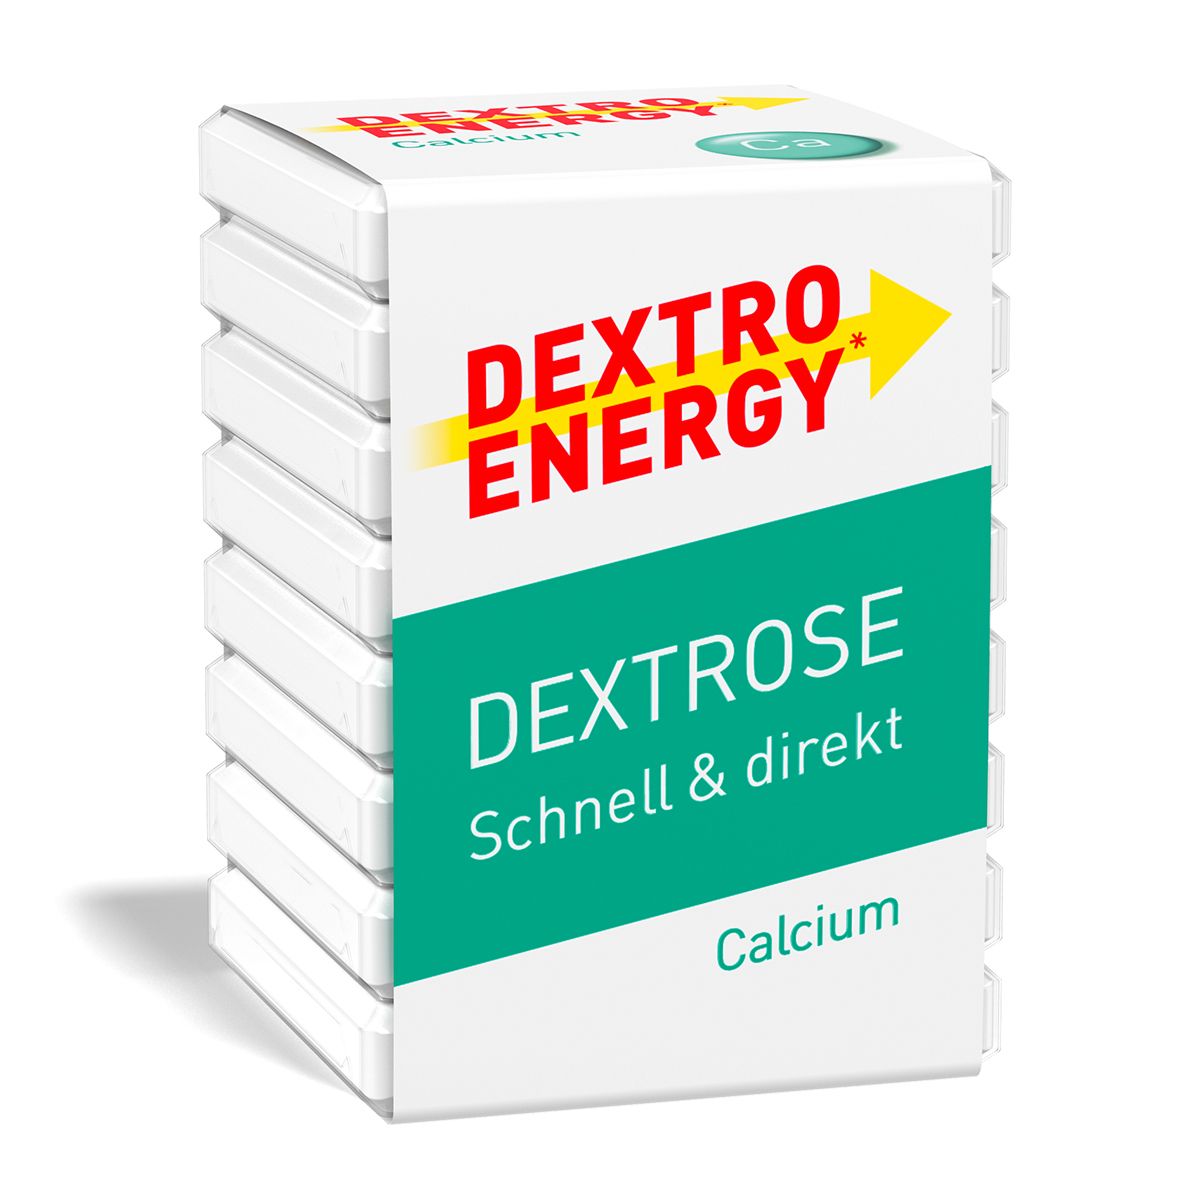 Image of Dextro Energy Calcium Würfel